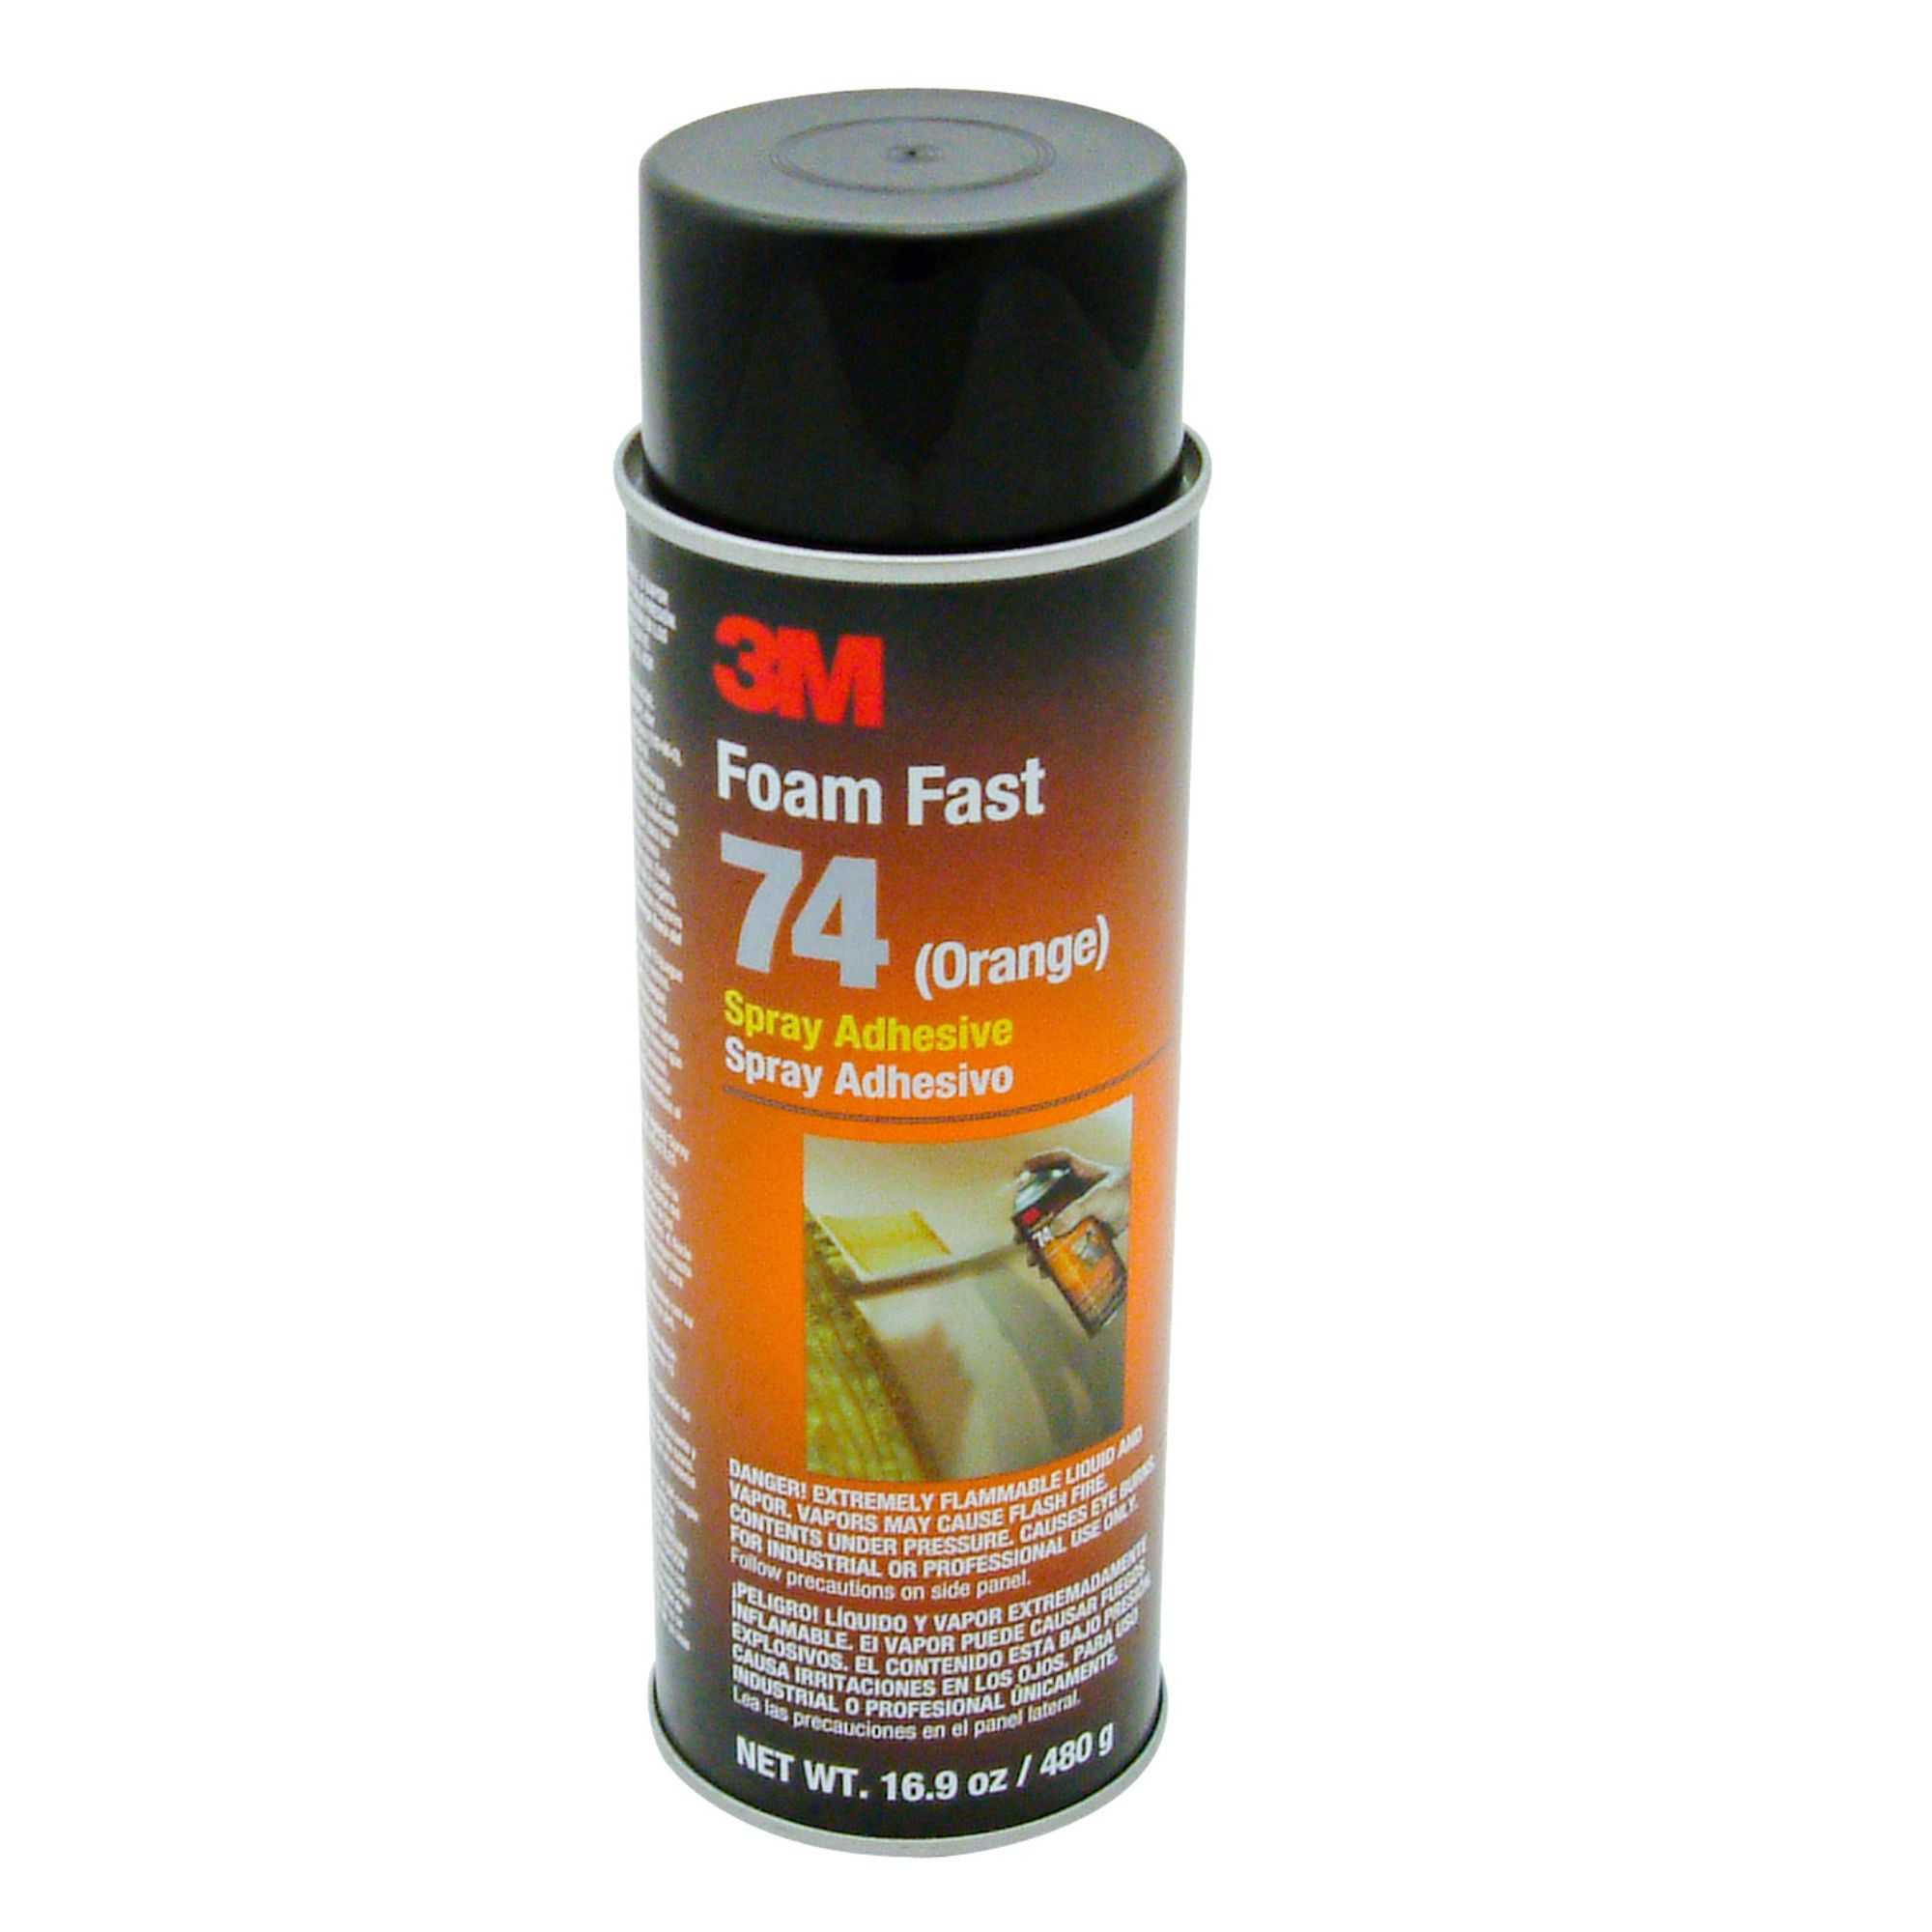 3M Foam Fast 74 Spray Adhesive [Orange]